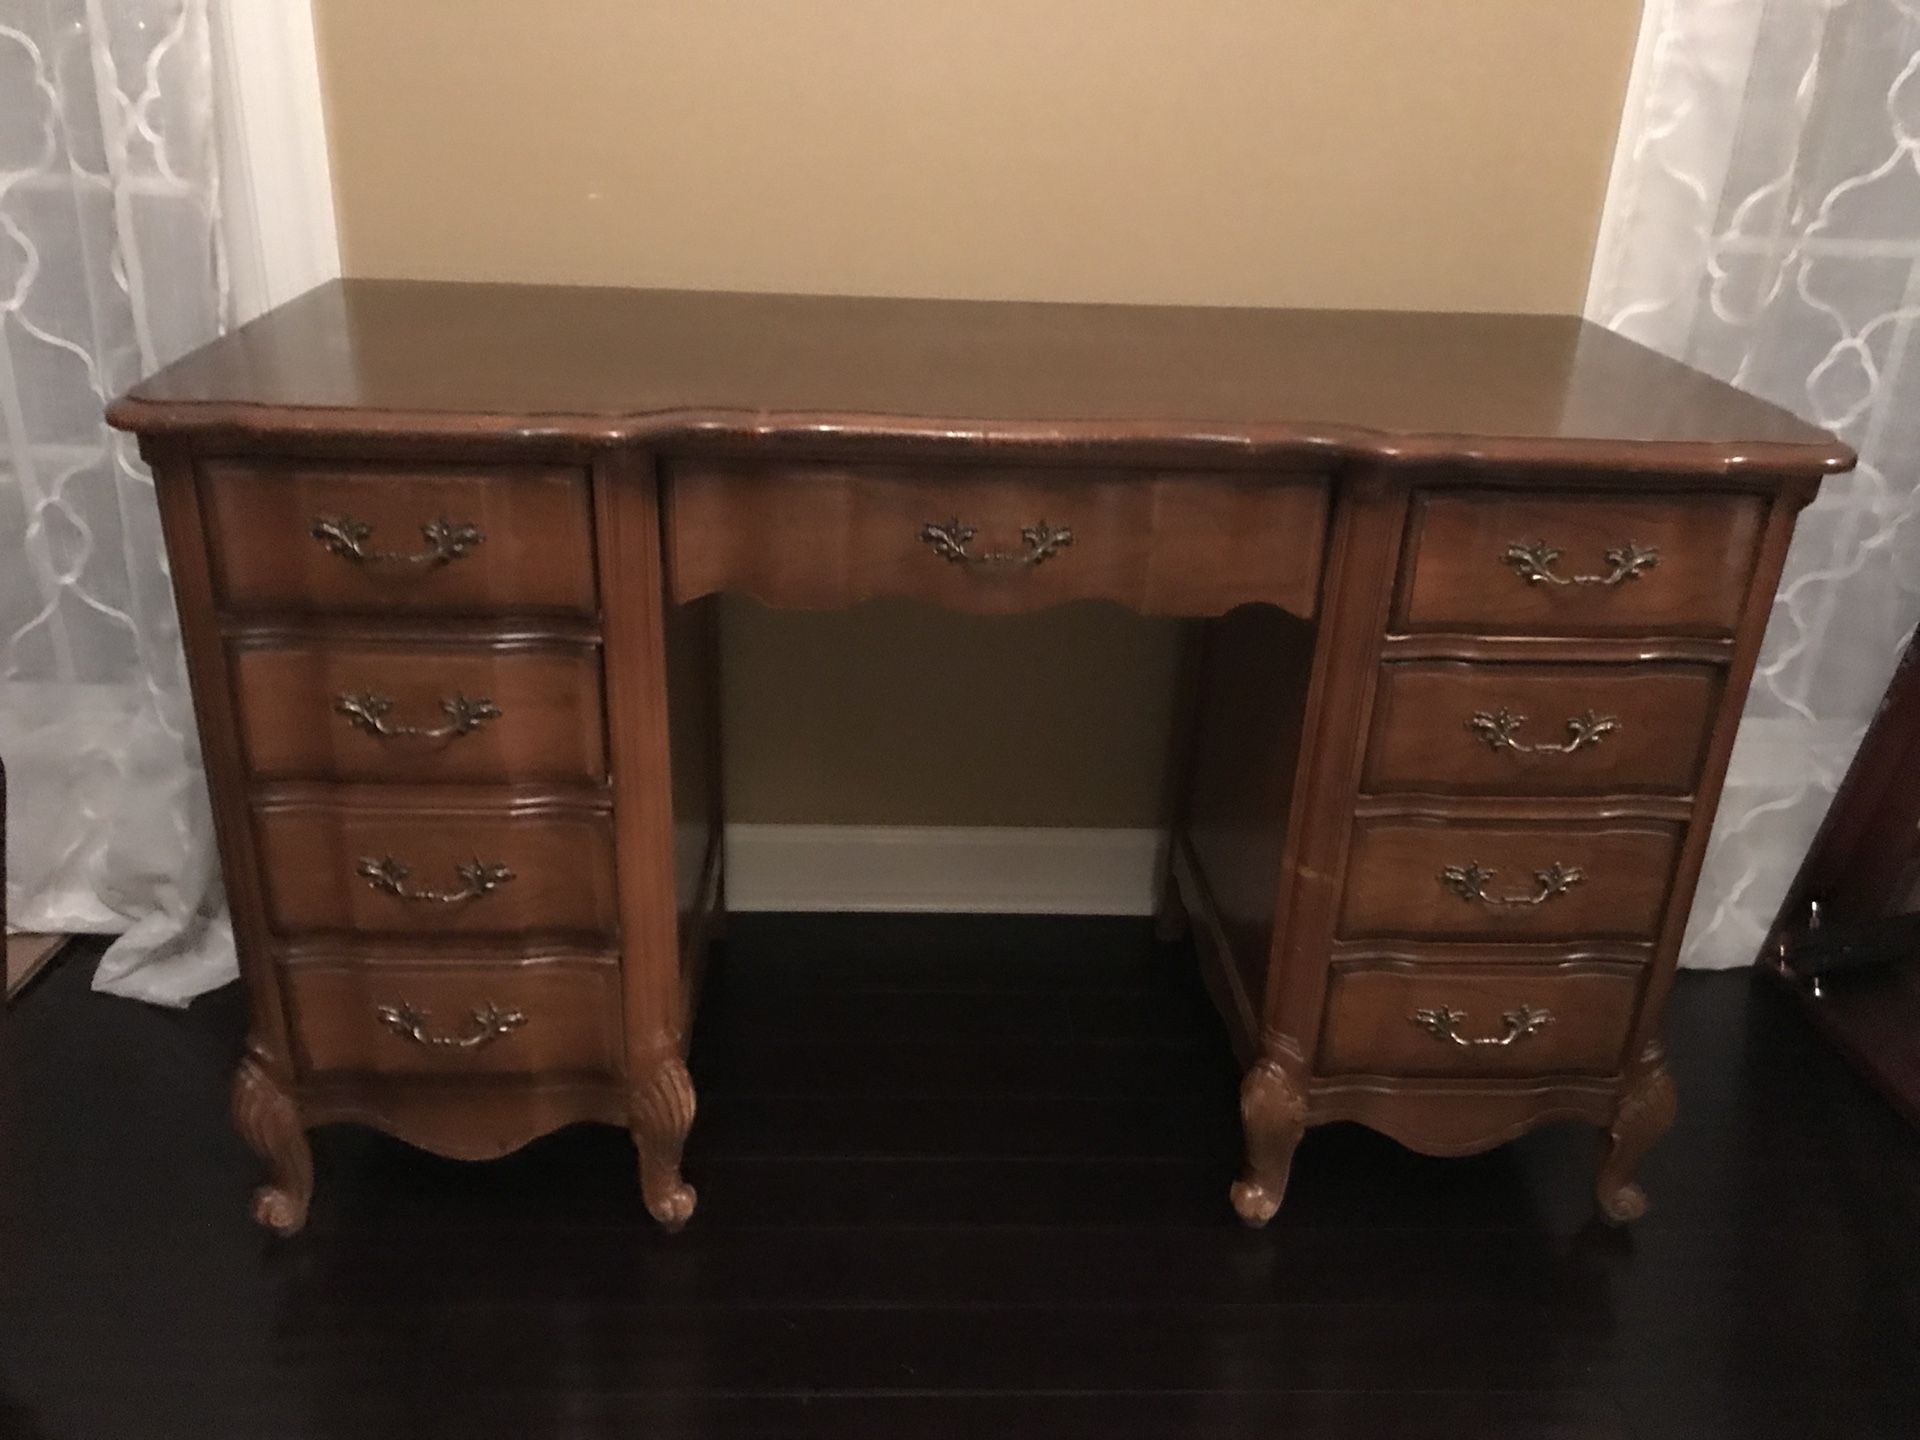 Antique Bassett furniture desk